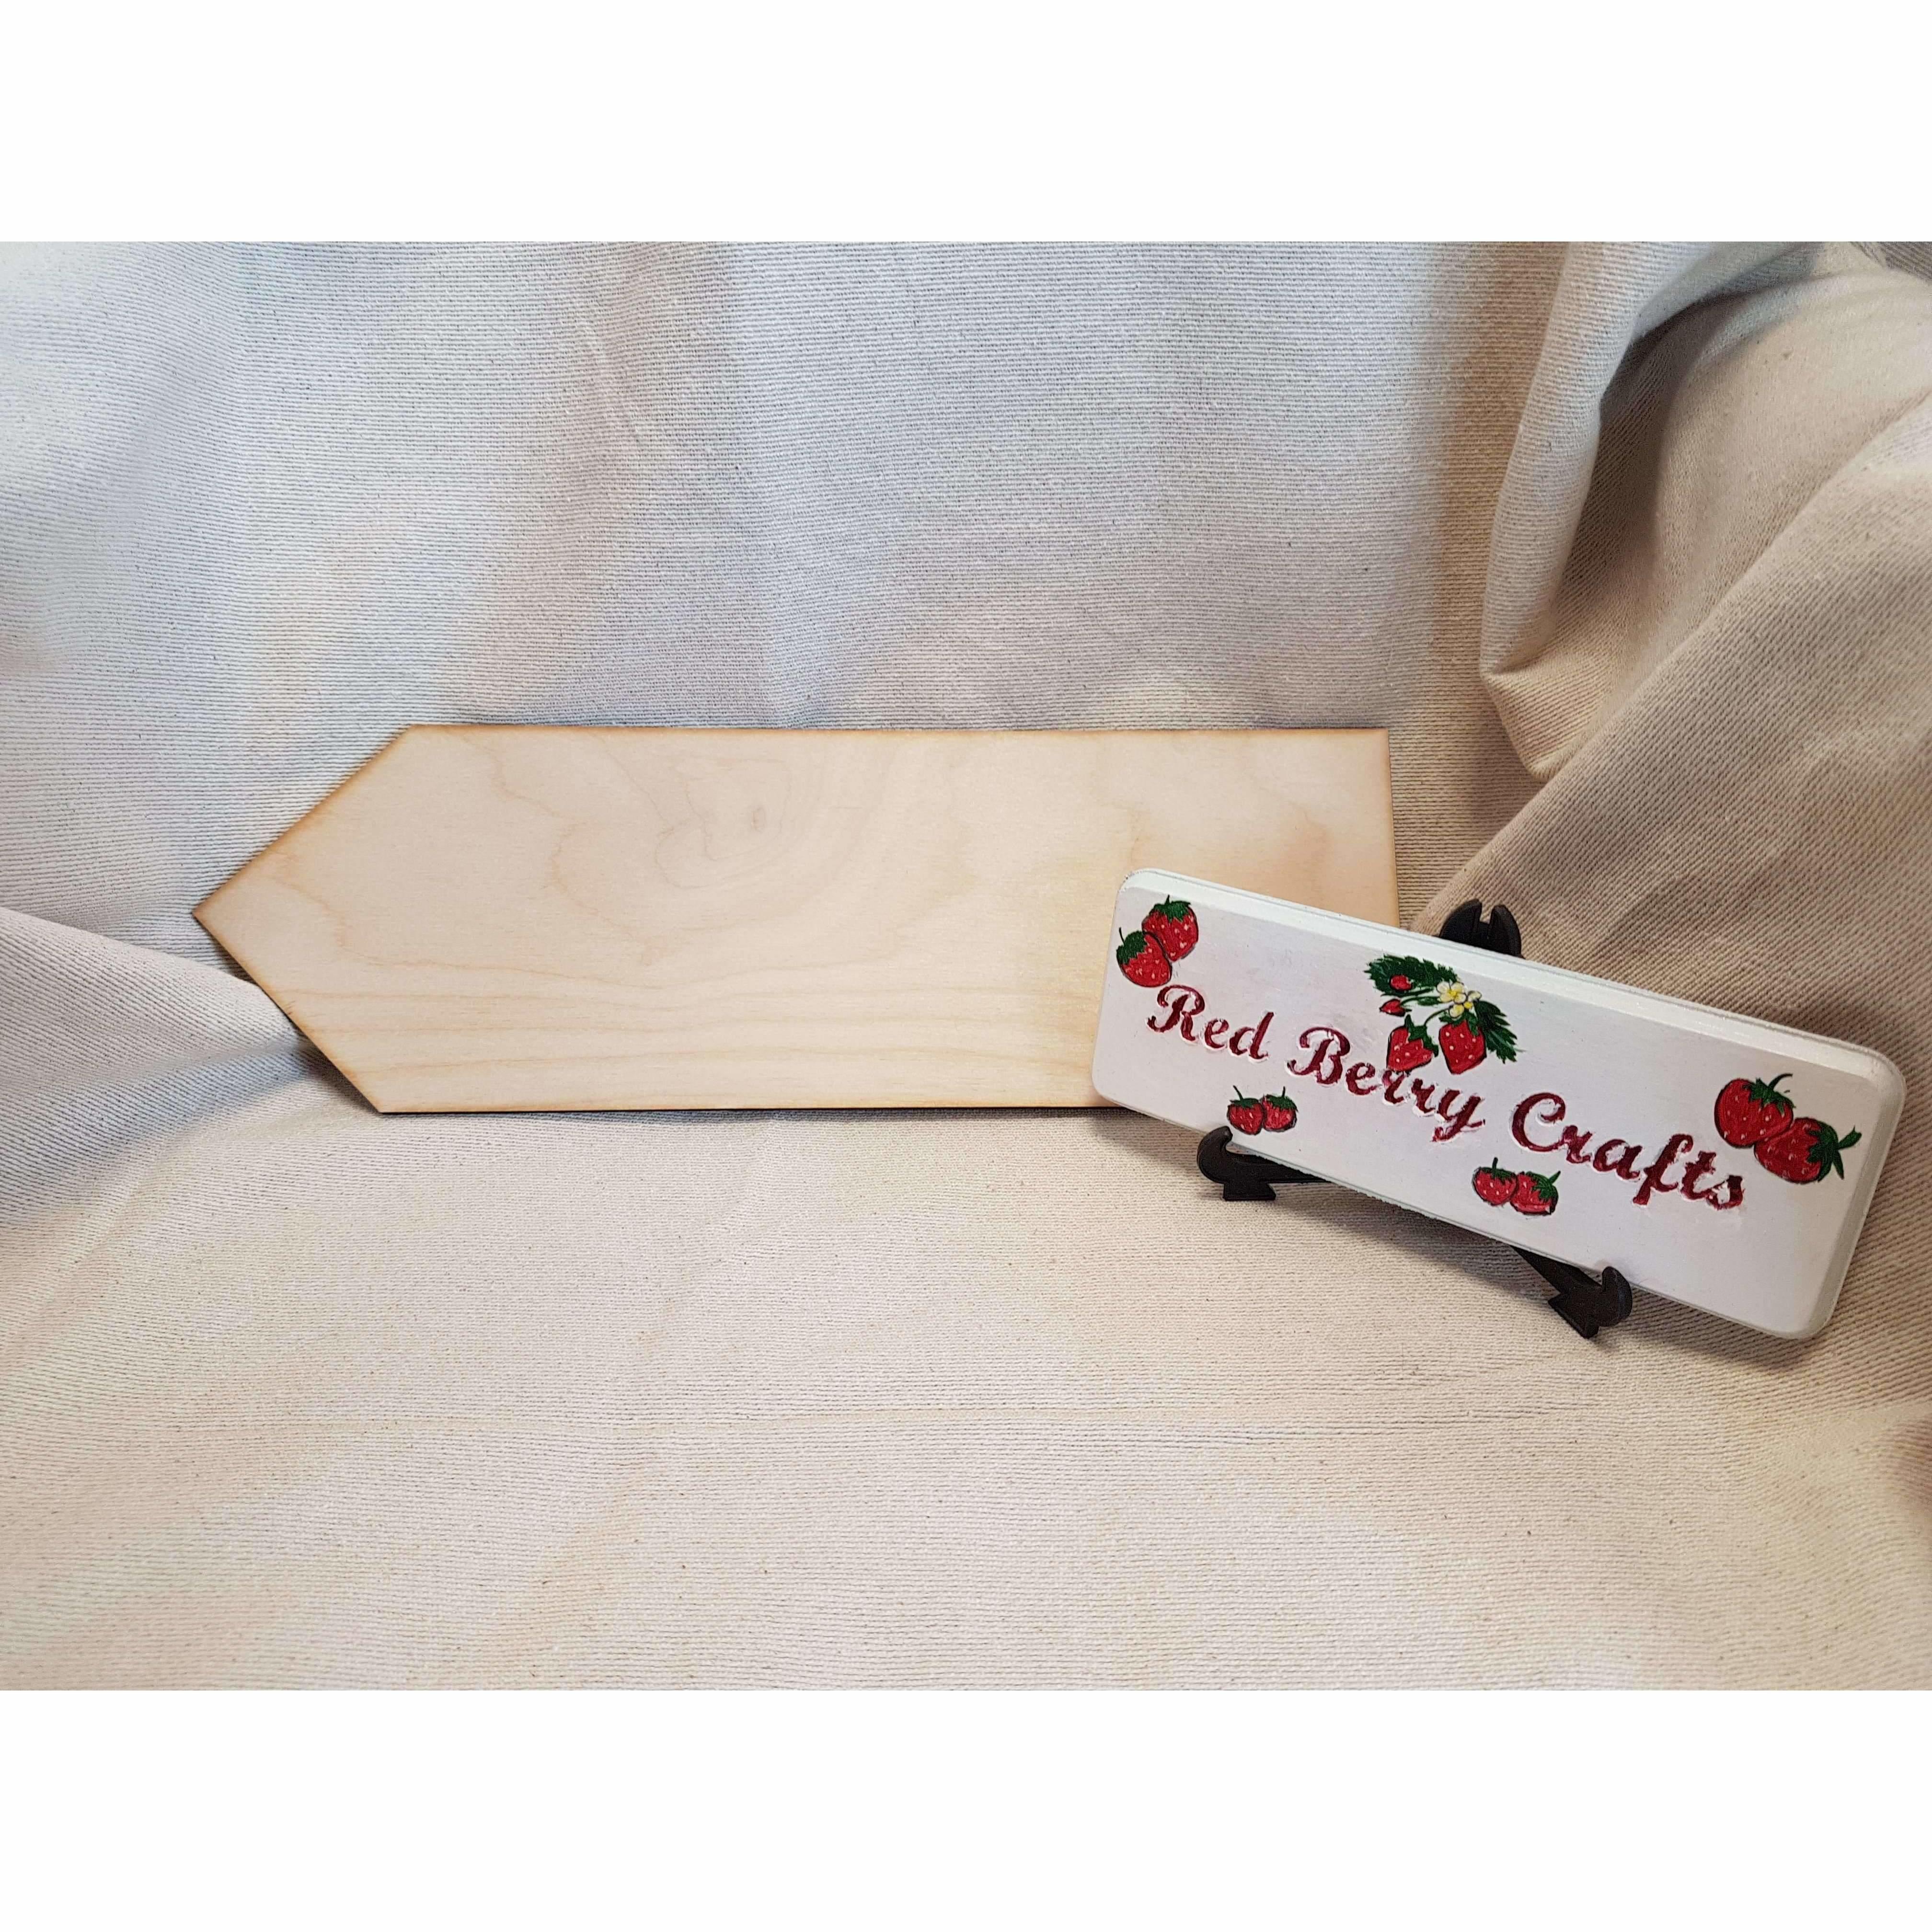 Red Berry Crafts Ltd:Blank Signpost Arrow